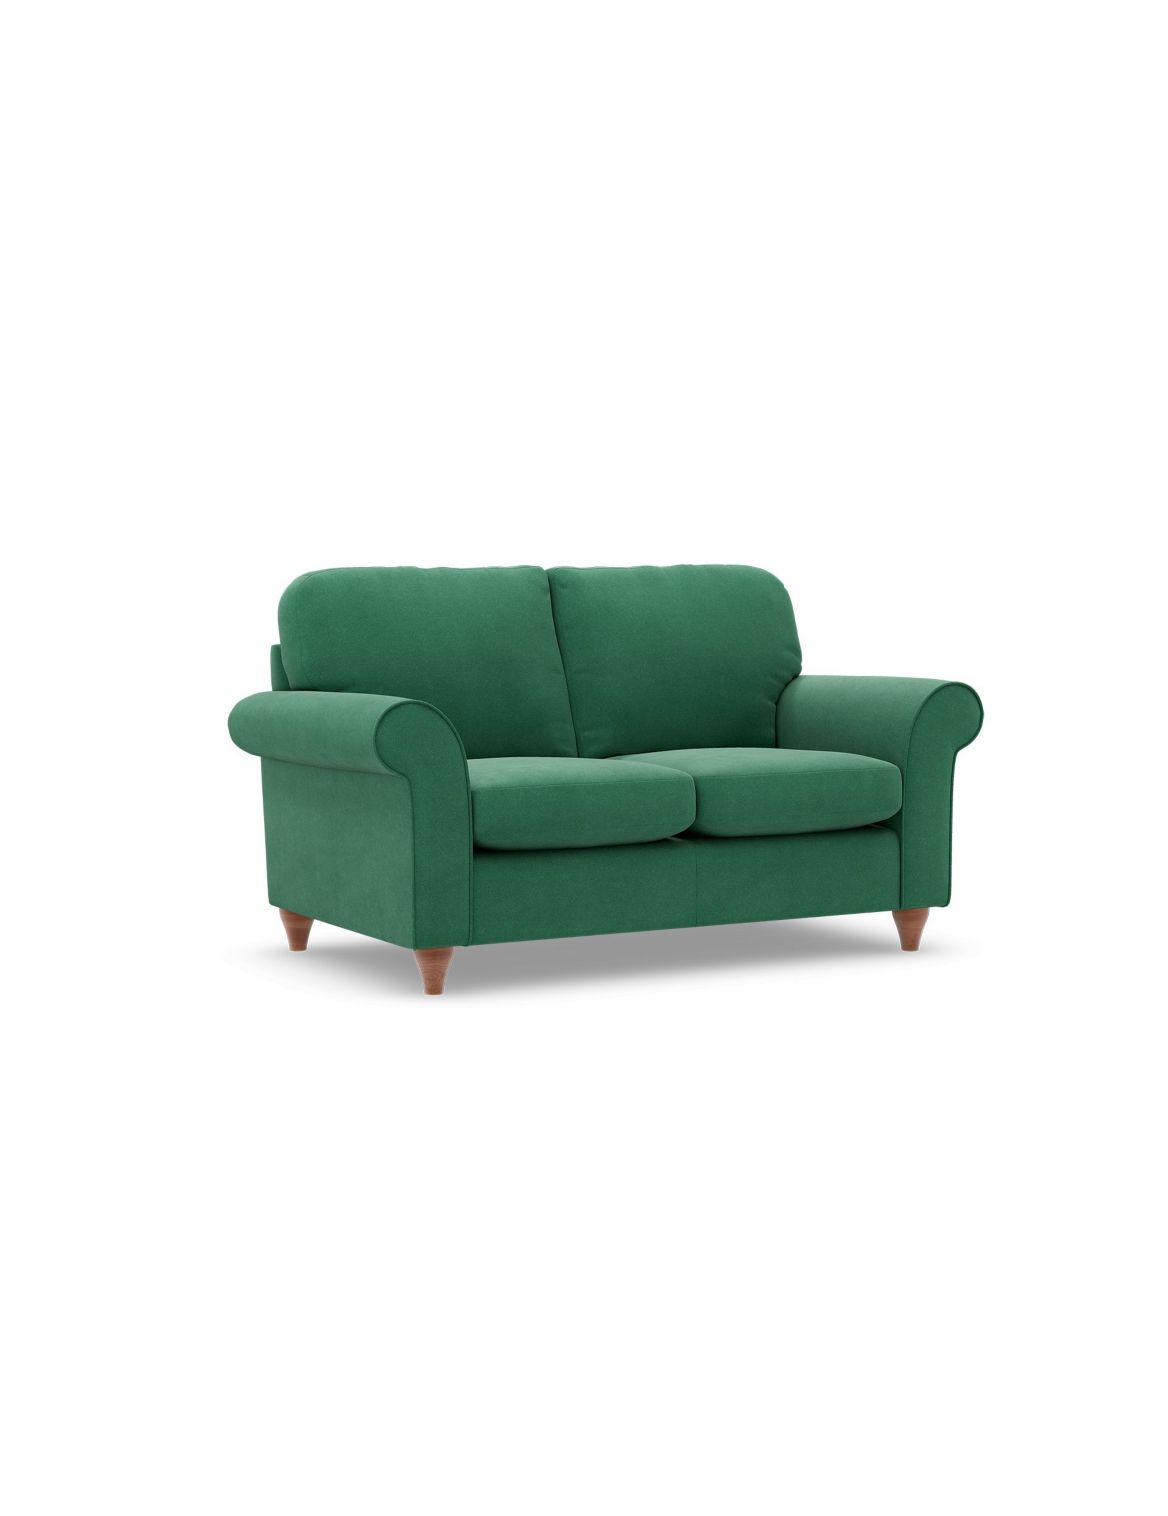 Olivia Compact Sofa green